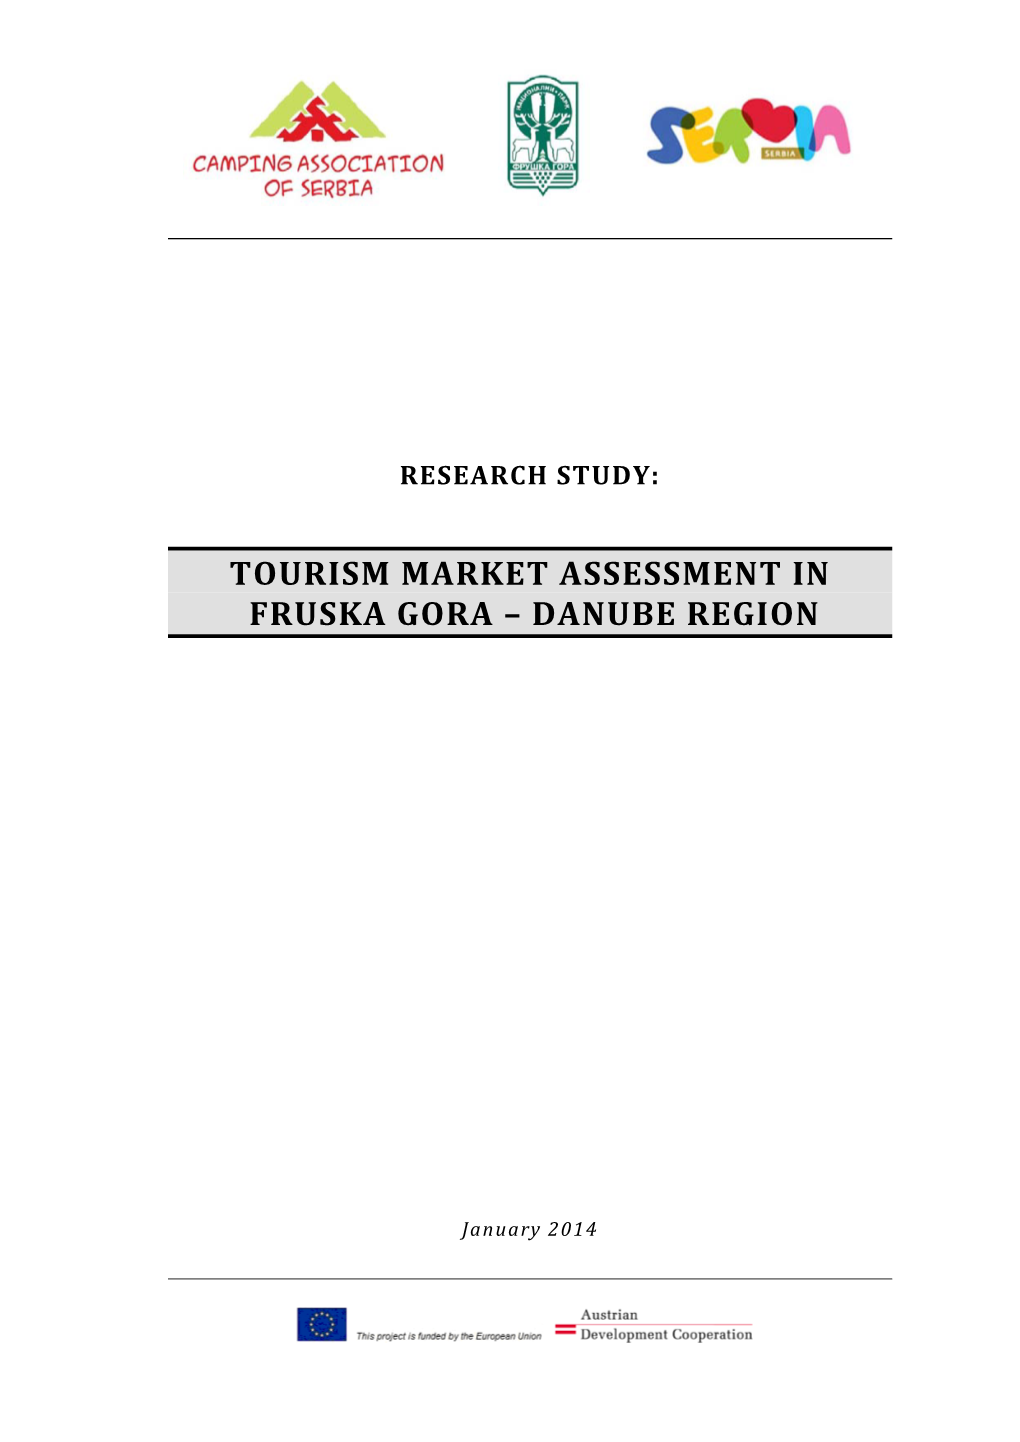 Research Study: Tourism Market Assessment in Fruska Gora